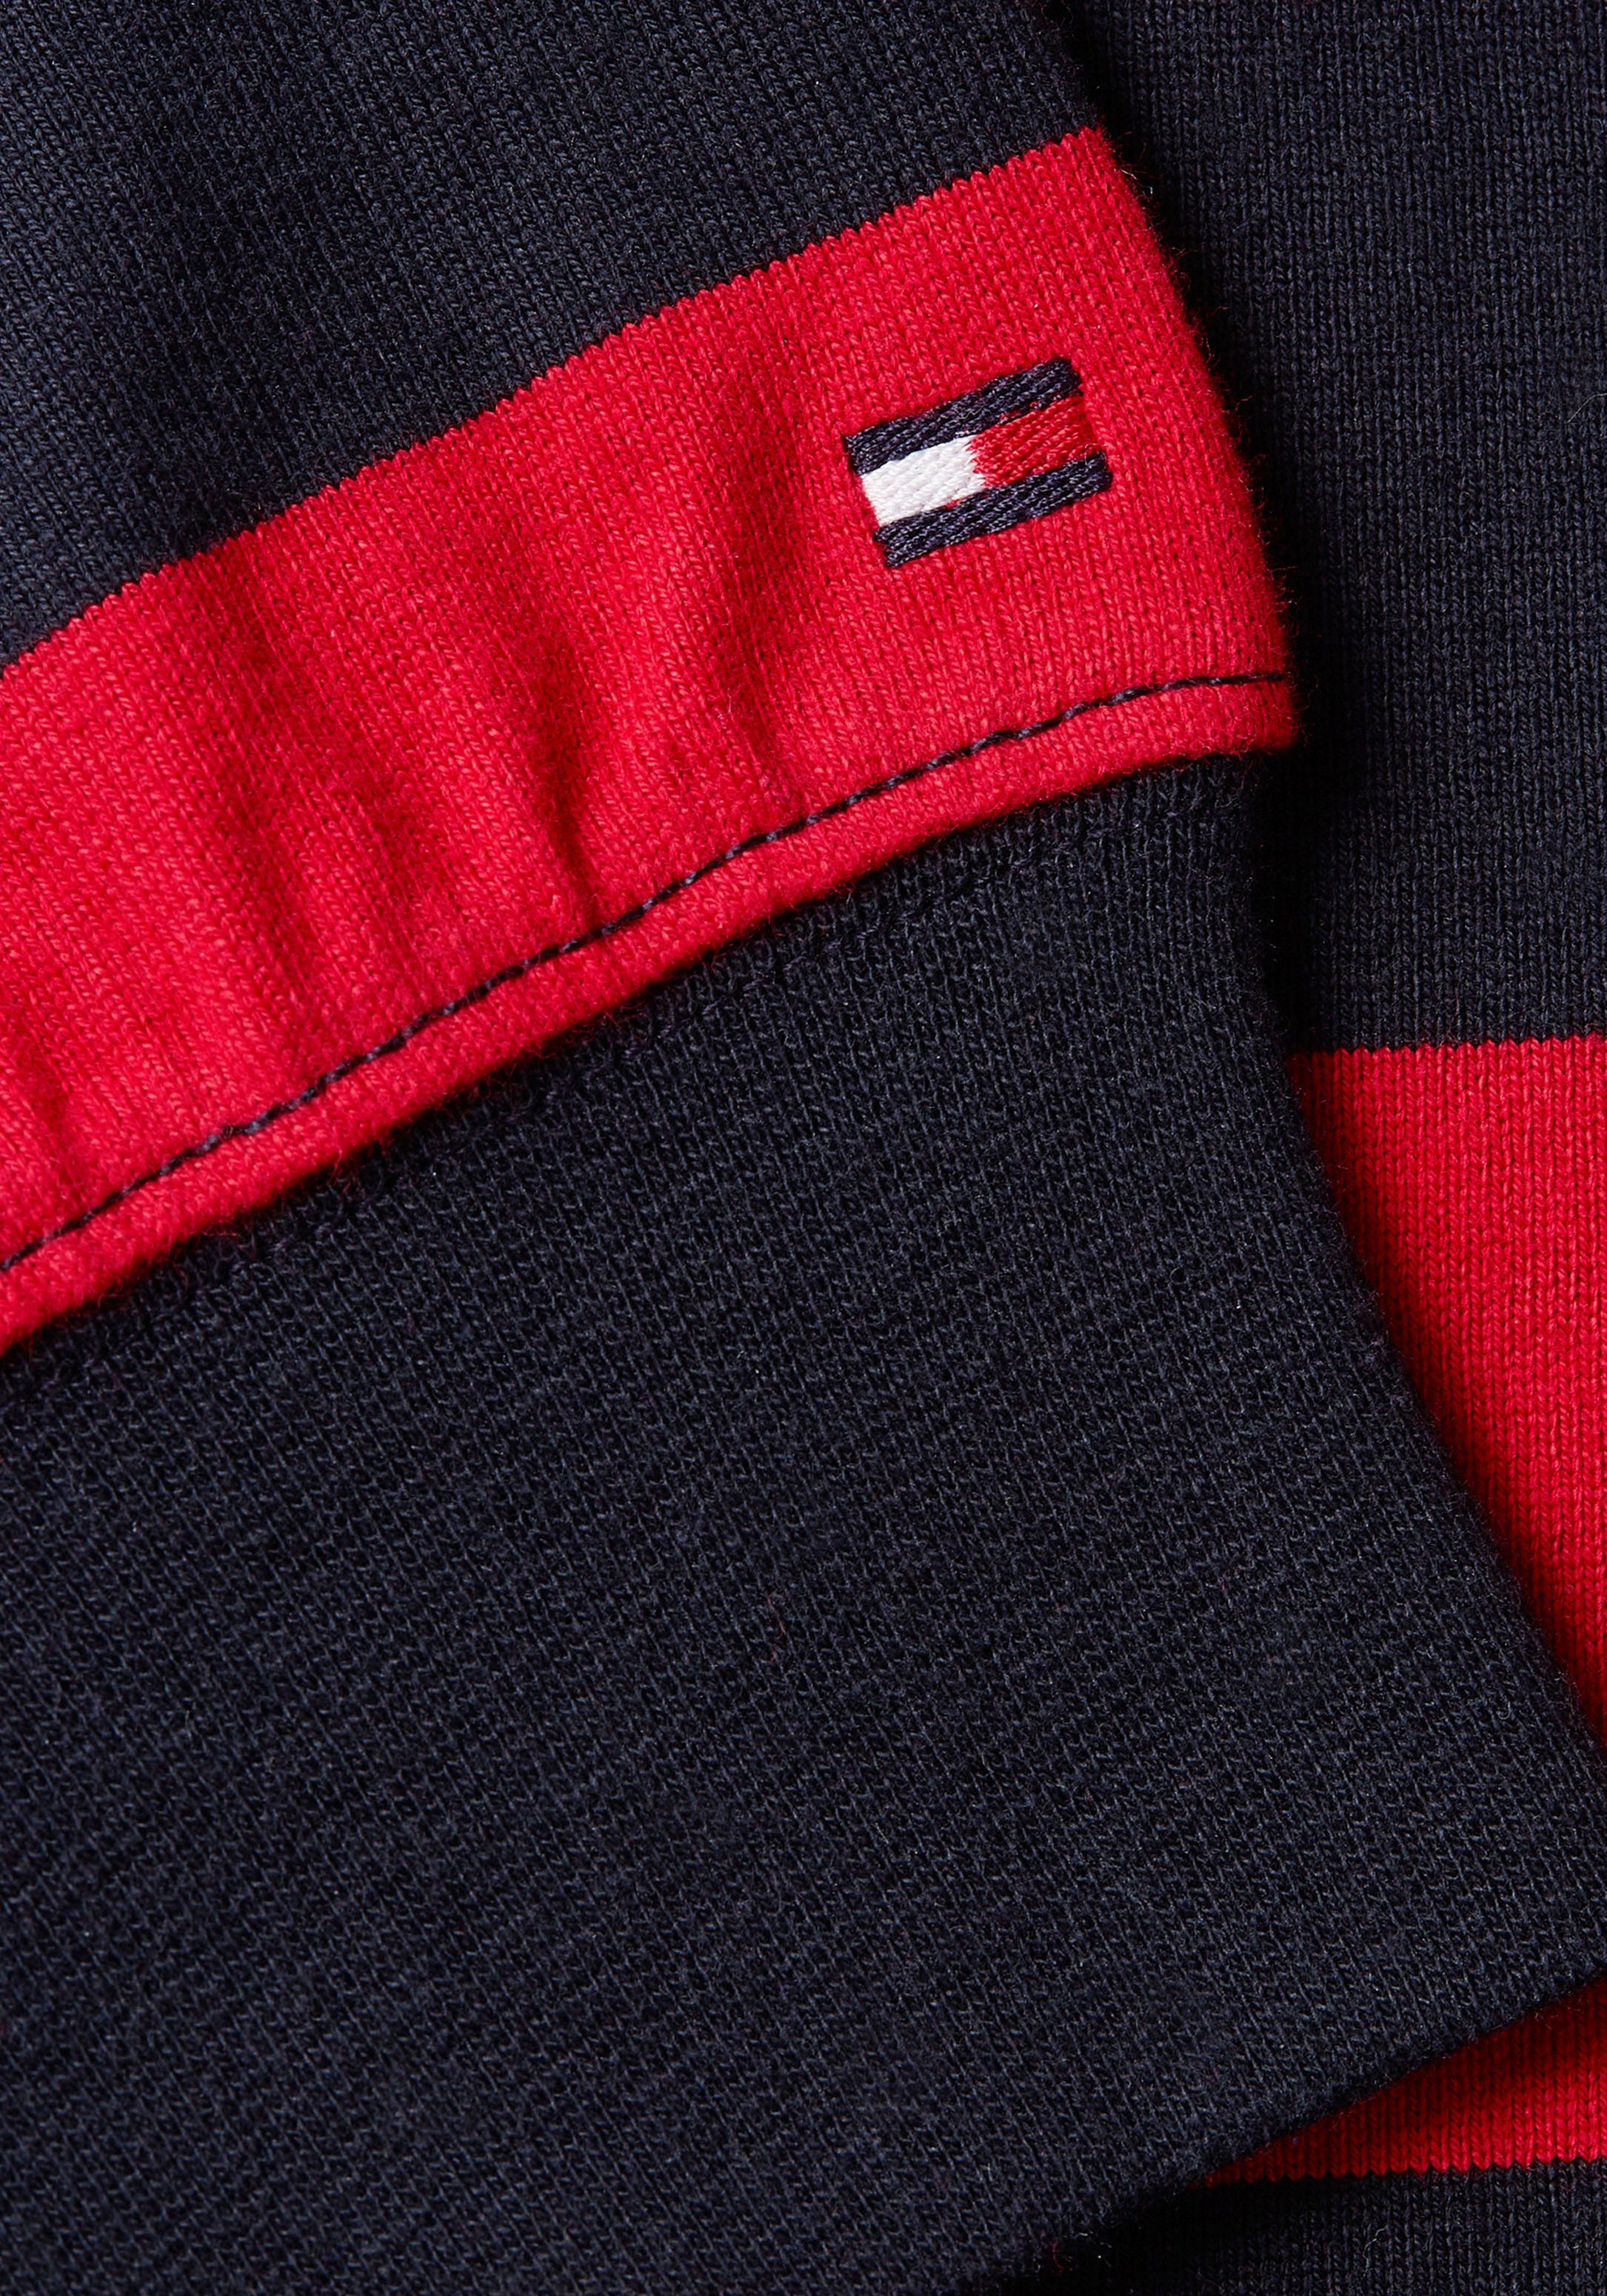 RUGBY Hilfiger BLOCK STRIPED Primary Streifendesign Sky Sweater Tommy im Red/Desert